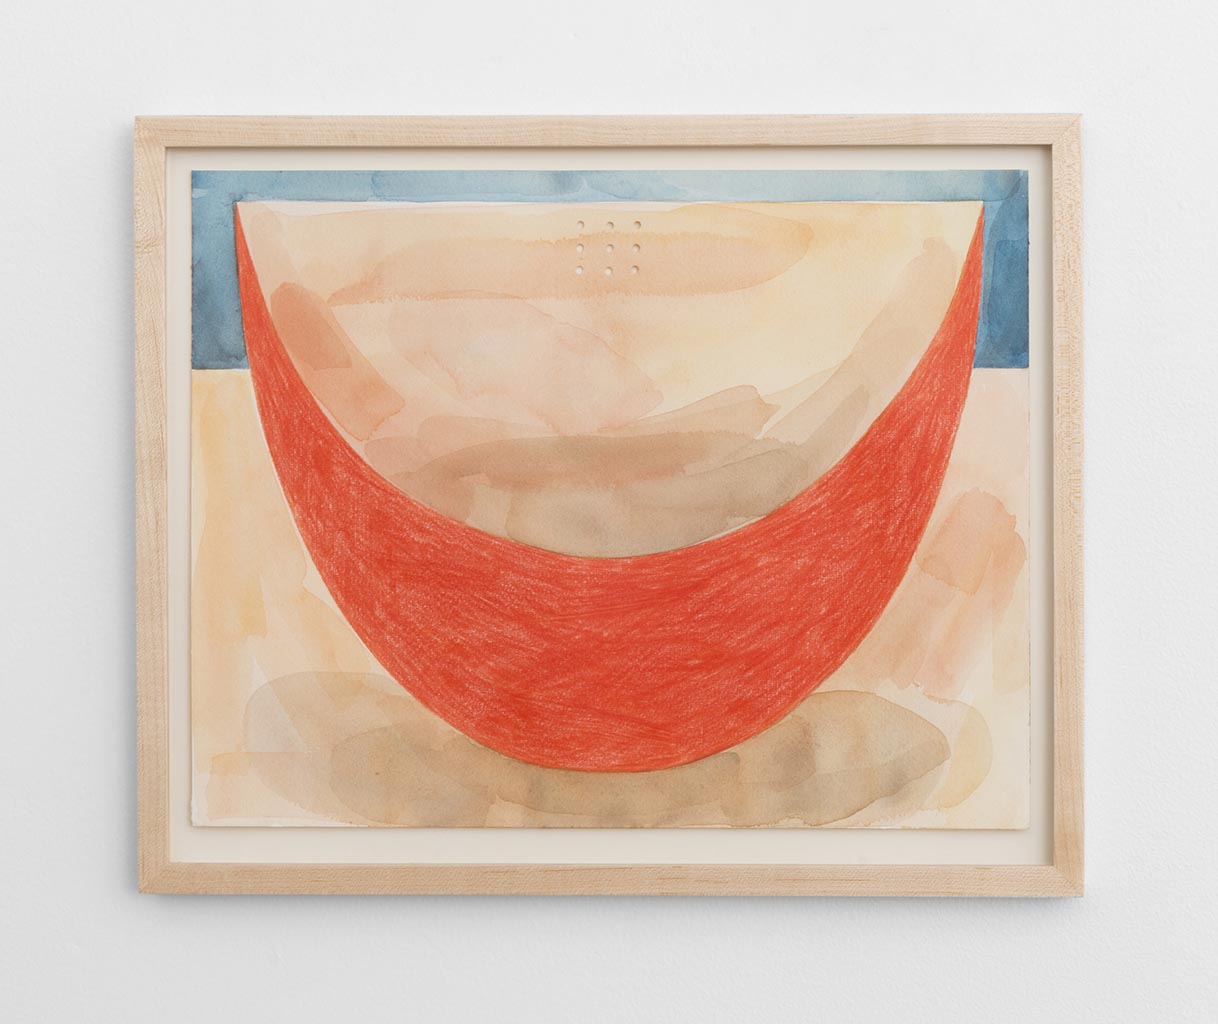 Slice, 2015, watercolor, colored pencil on paper 11 x 14 inches